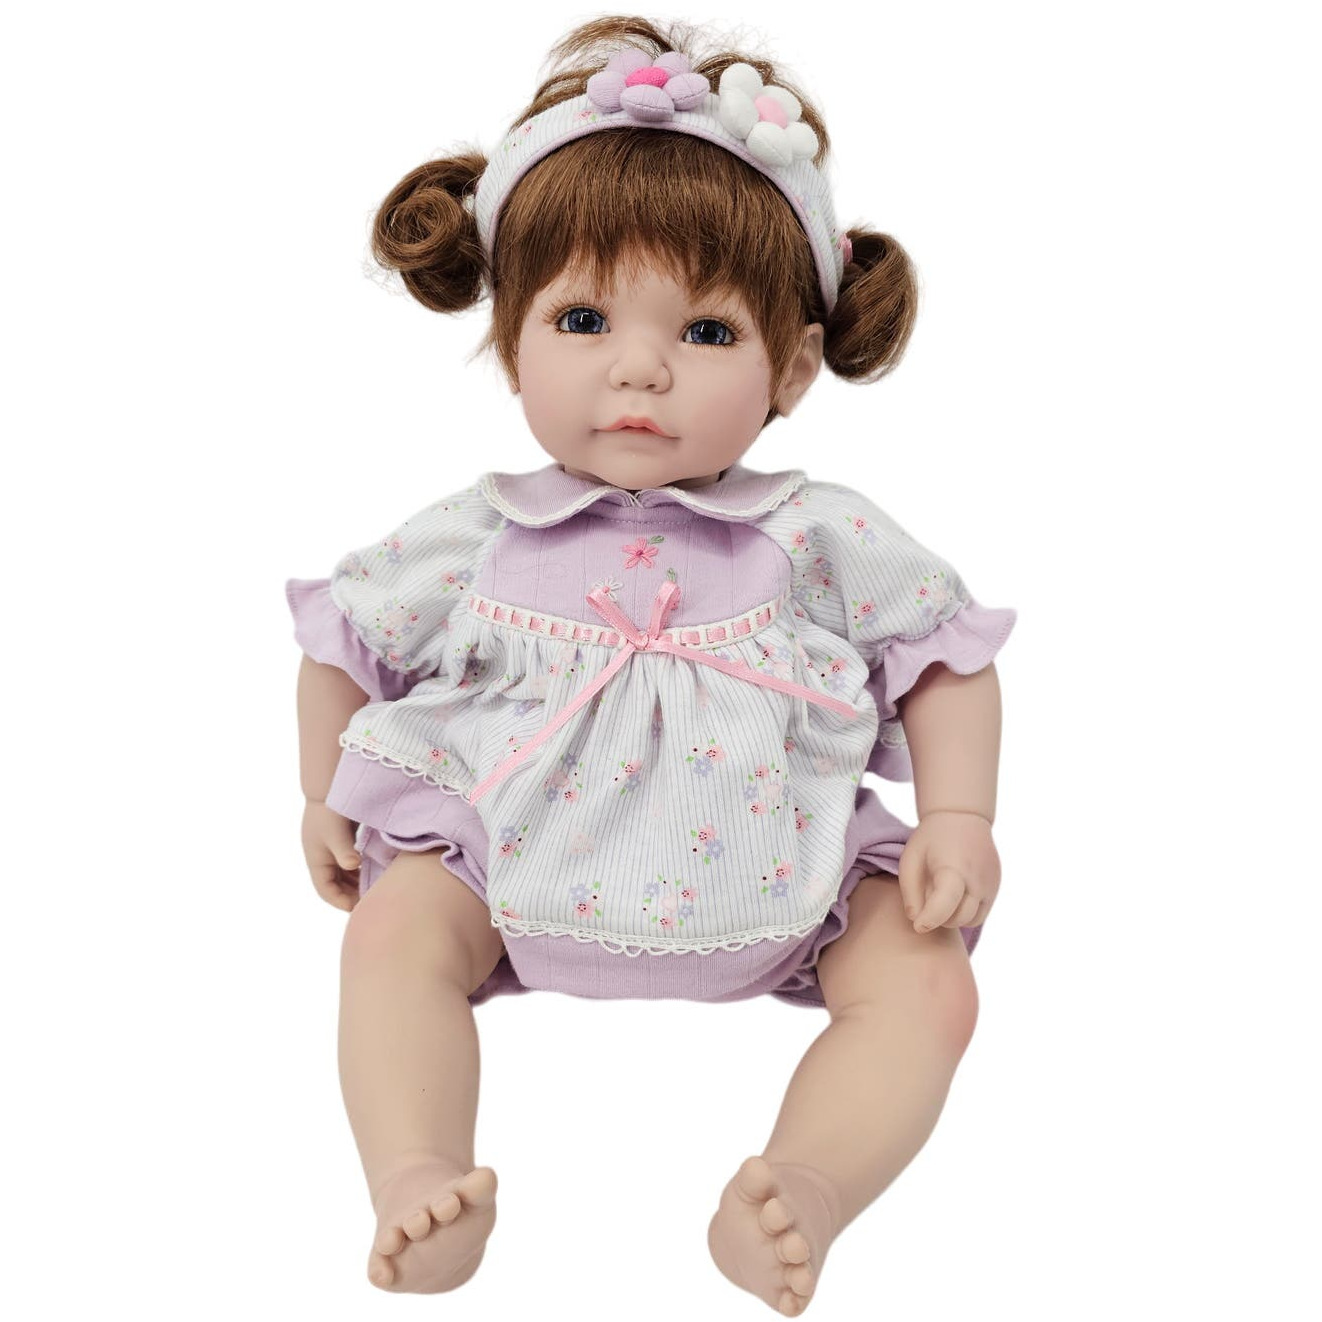 Adora Realistic Reborn Baby Doll Auburn Hair Blue Eyes Purple Outfit